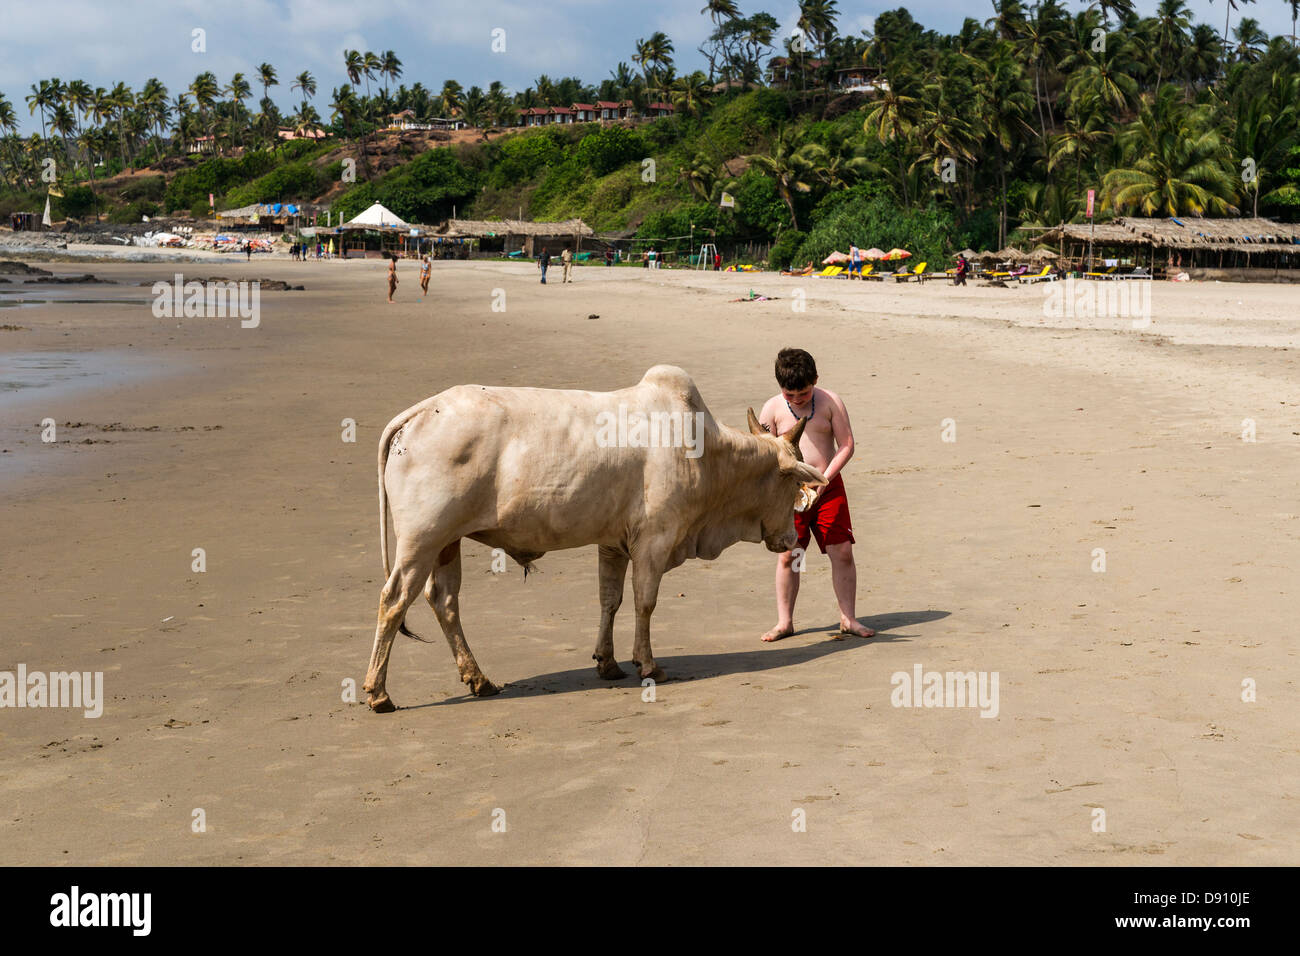 Vagator beach in Goa India. Stock Photo